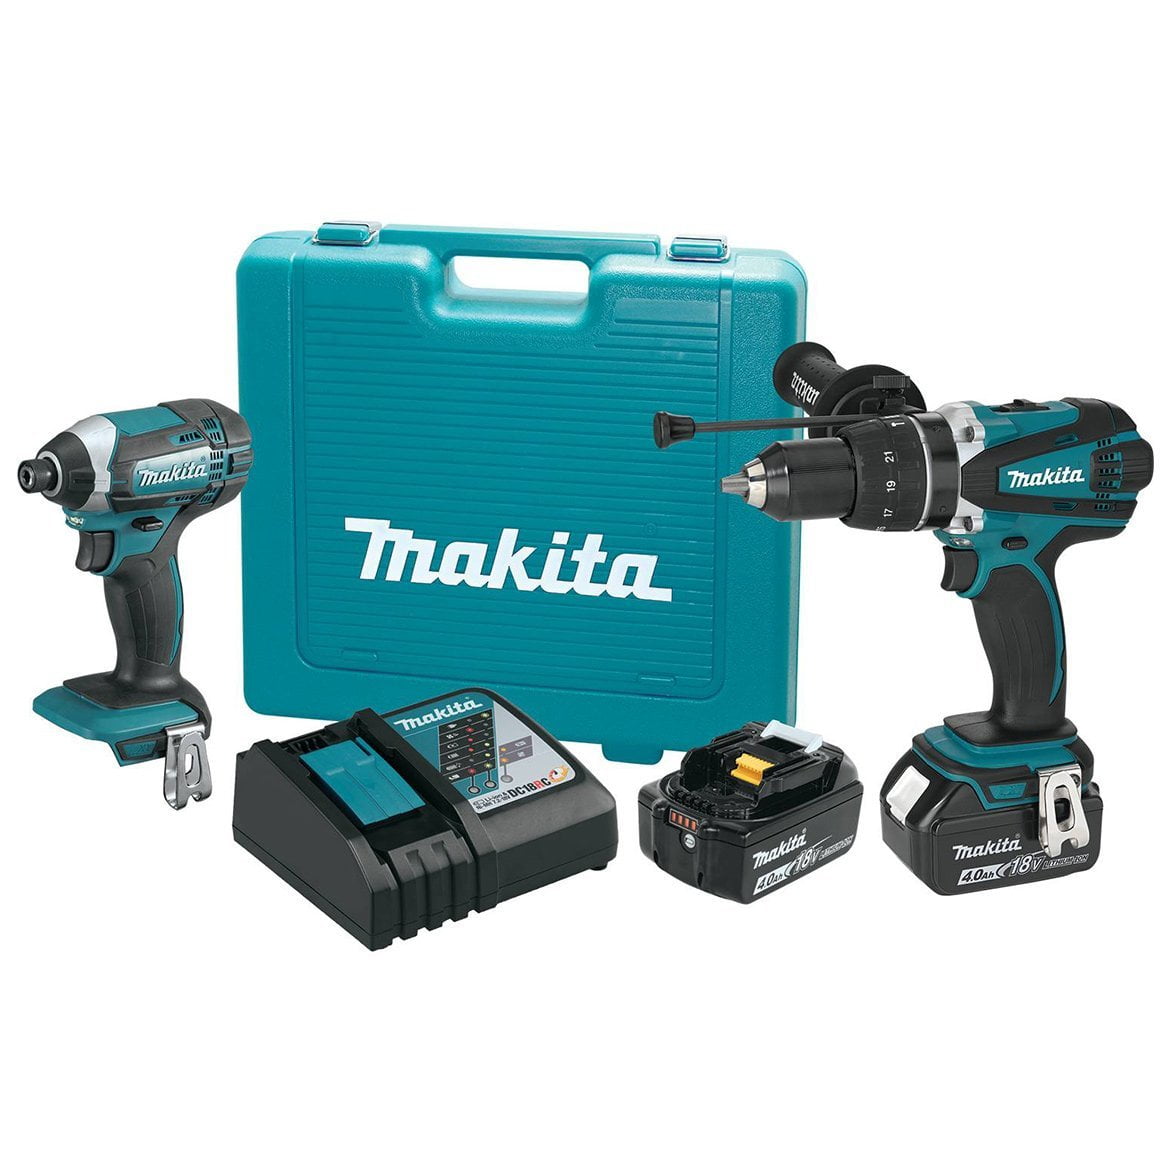 Makita LXT 18 V Cordless Brushed Tool Hammer Drill and Impact Driver Kit - Walmart.com